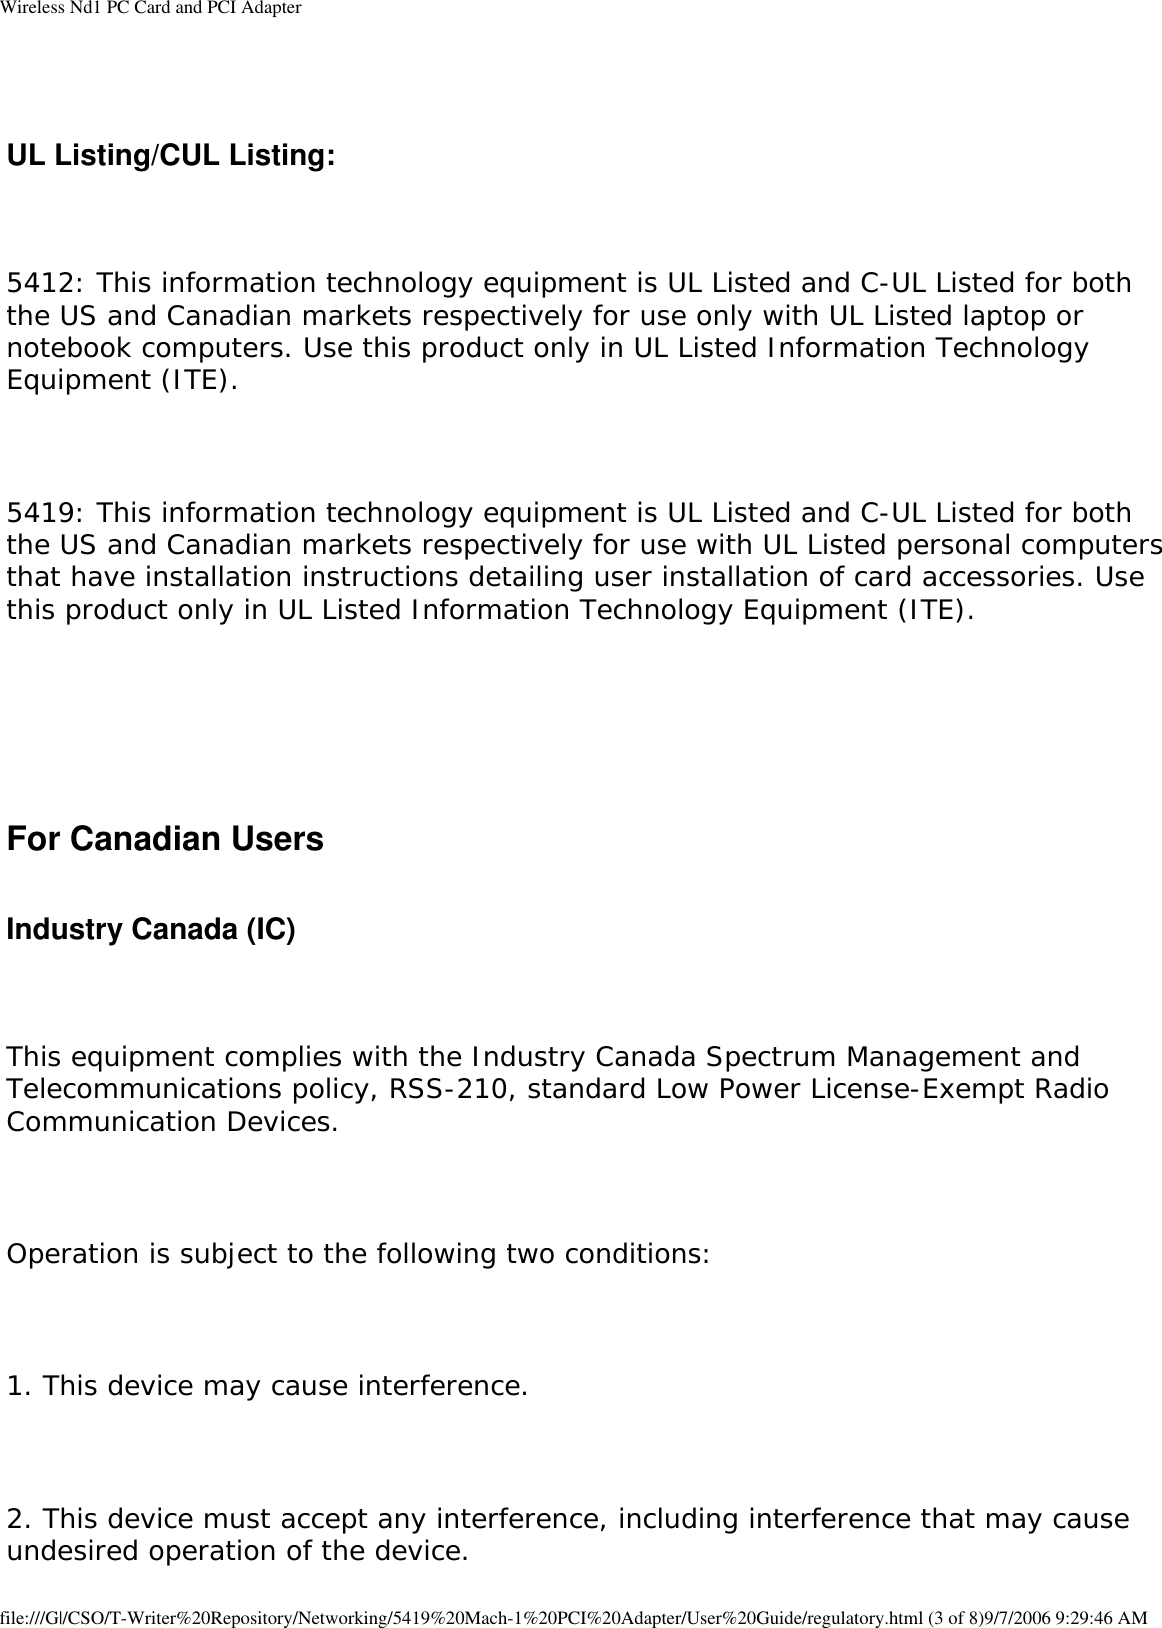 Page 66 of GemTek Technology C950622G Wireless Nd1 PC Card User Manual Wireless Nd1 PC Card and PCI Adapter